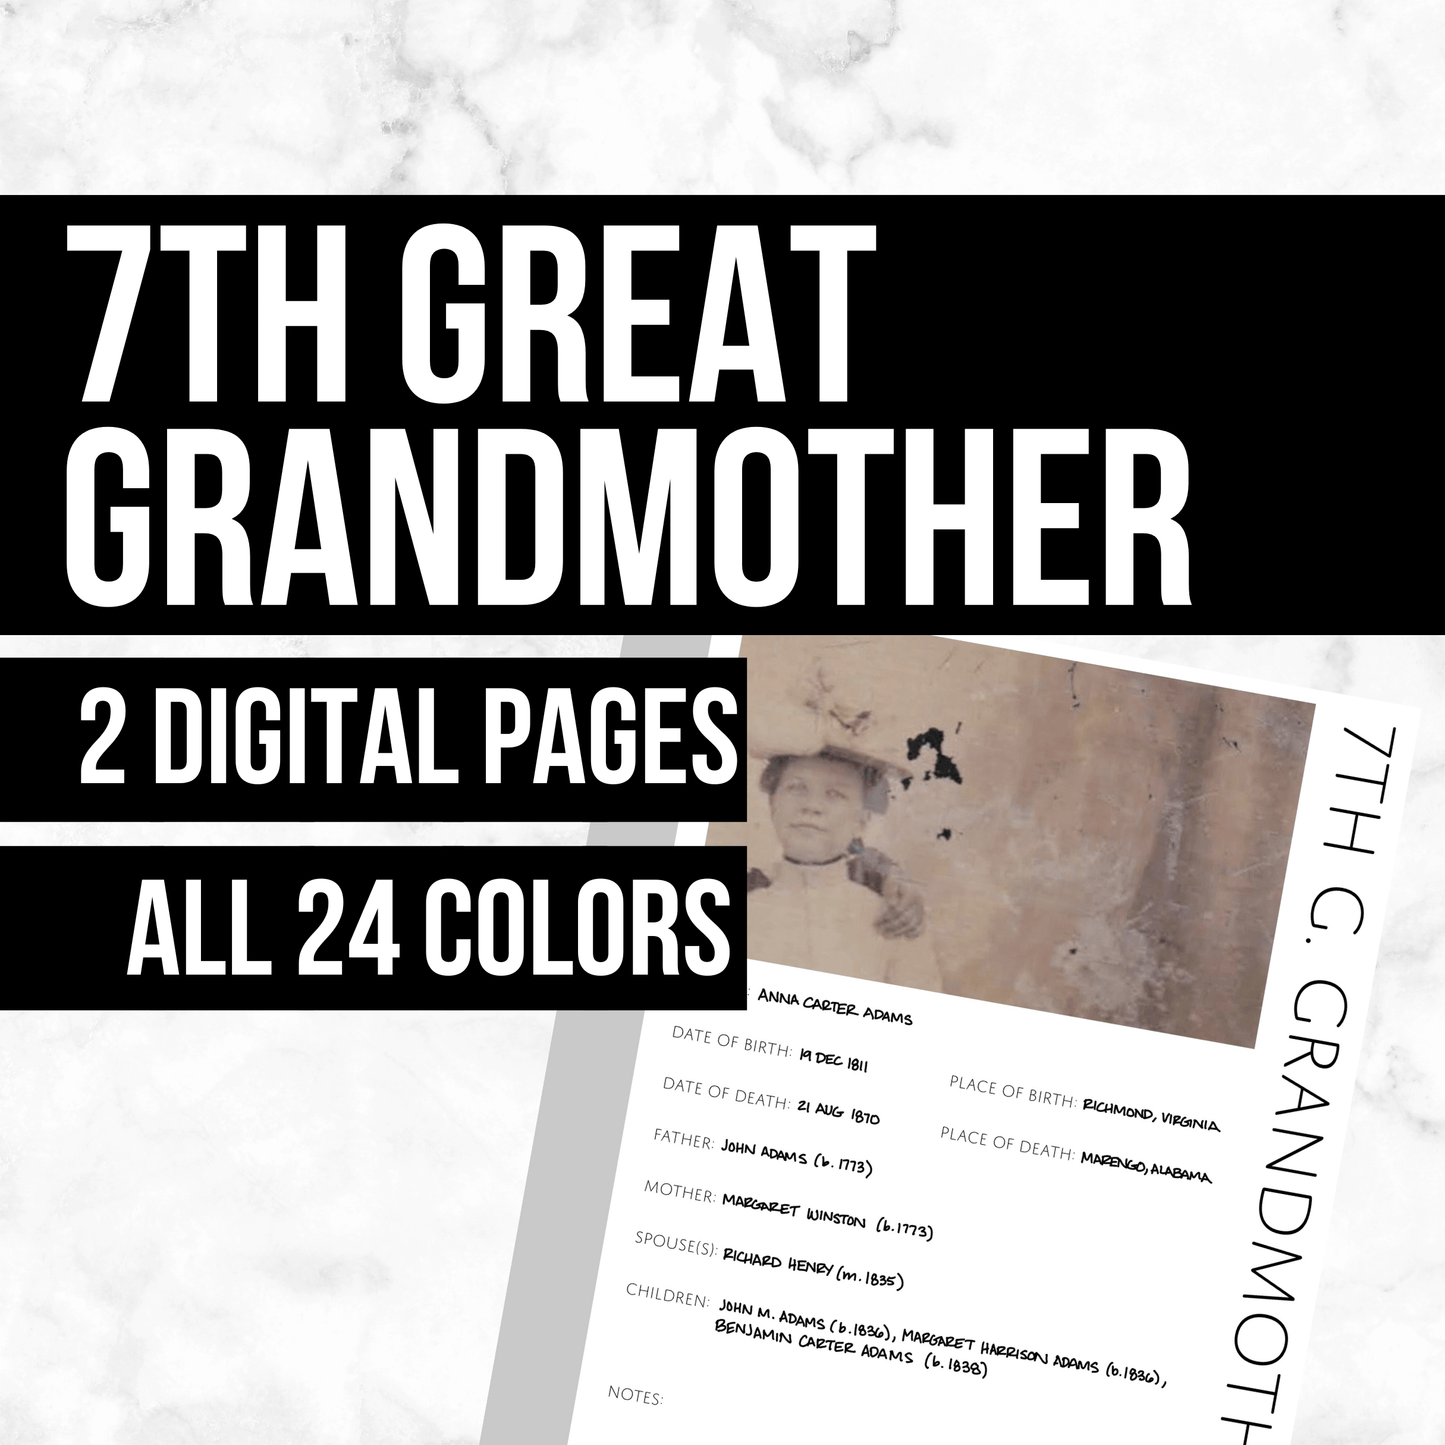 7th Great Grandmother Profile: Printable Genealogy Form (Digital Download)